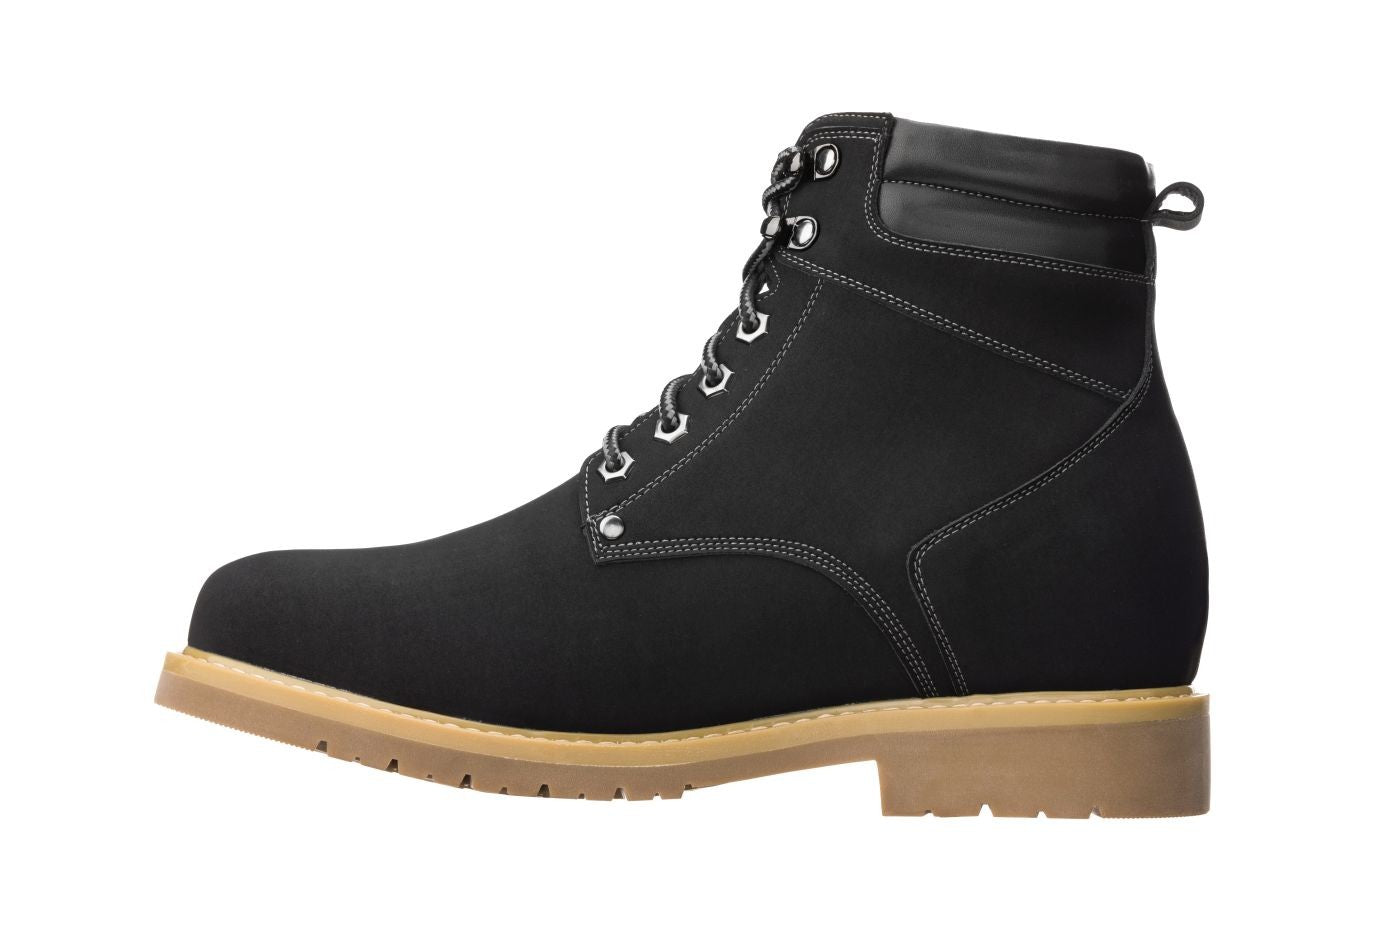 CALTO - K8820 - 3.2 Inches Taller (Nubuck Black) - Work Style Boot ...